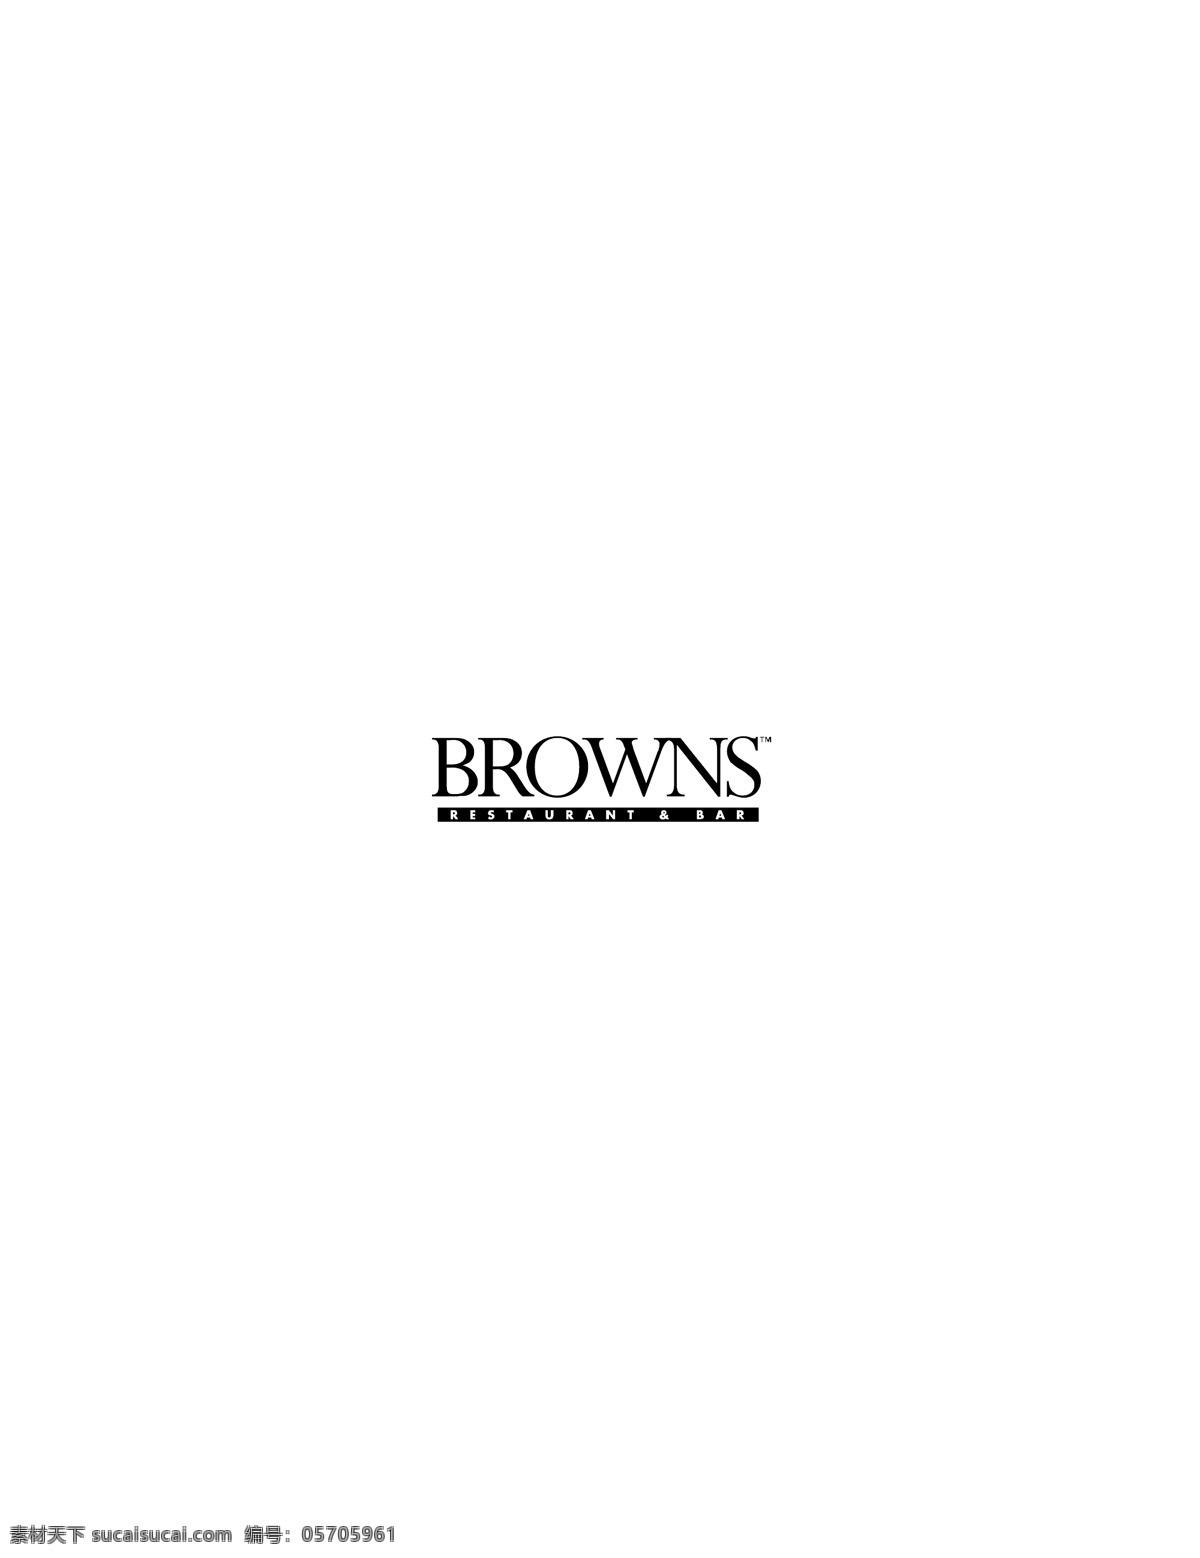 browns logo大全 logo 设计欣赏 商业矢量 矢量下载 名牌 食品 标志 标志设计 欣赏 网页矢量 矢量图 其他矢量图